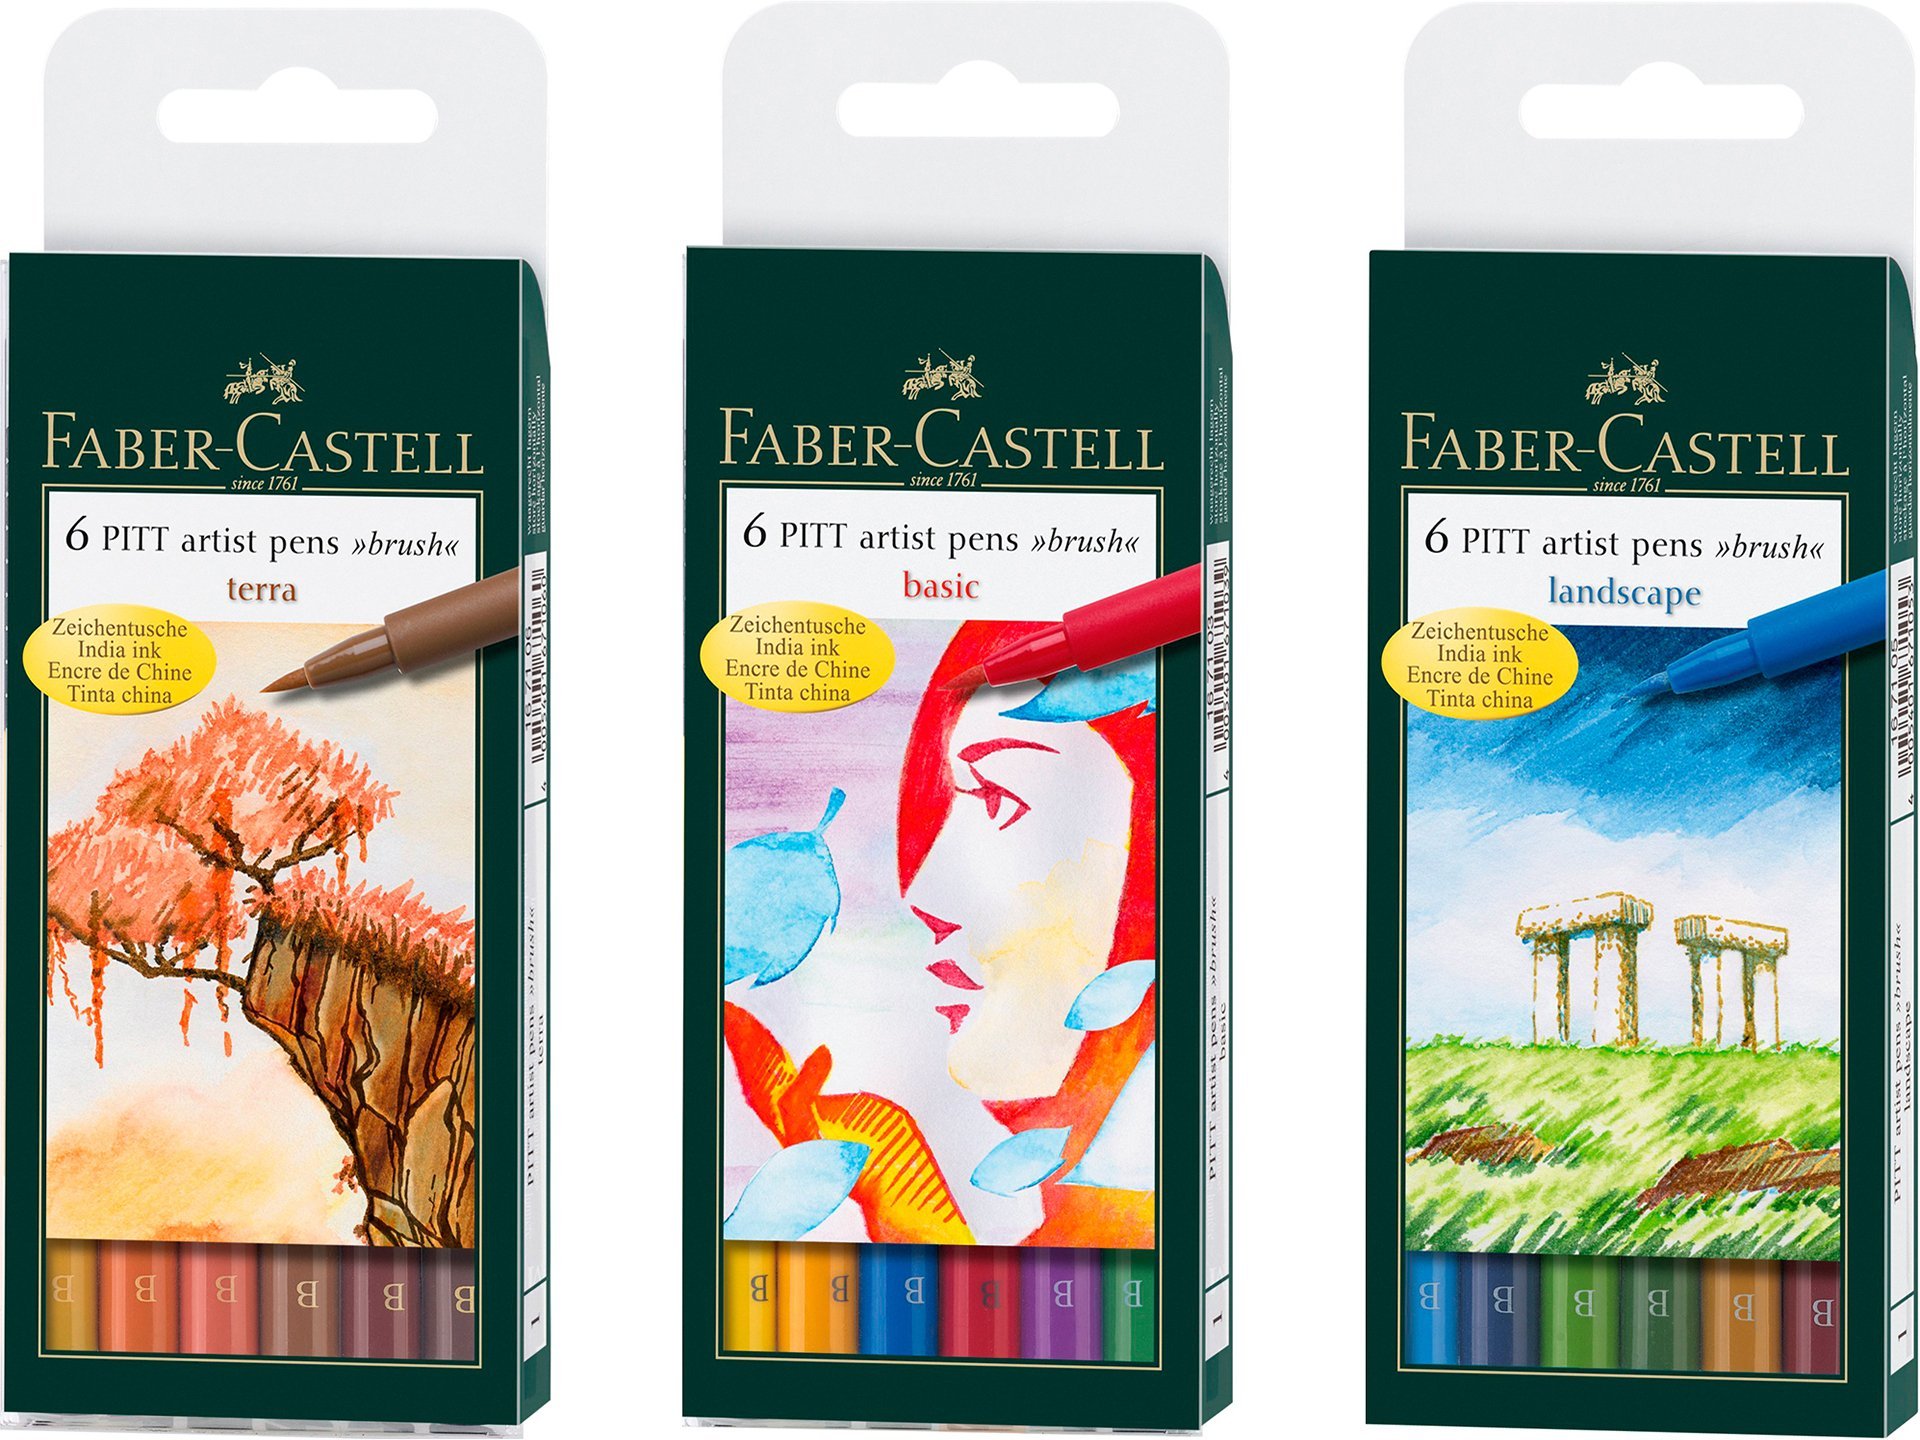 Faber-Castell Pitt artist pen, brush, online at Modulor